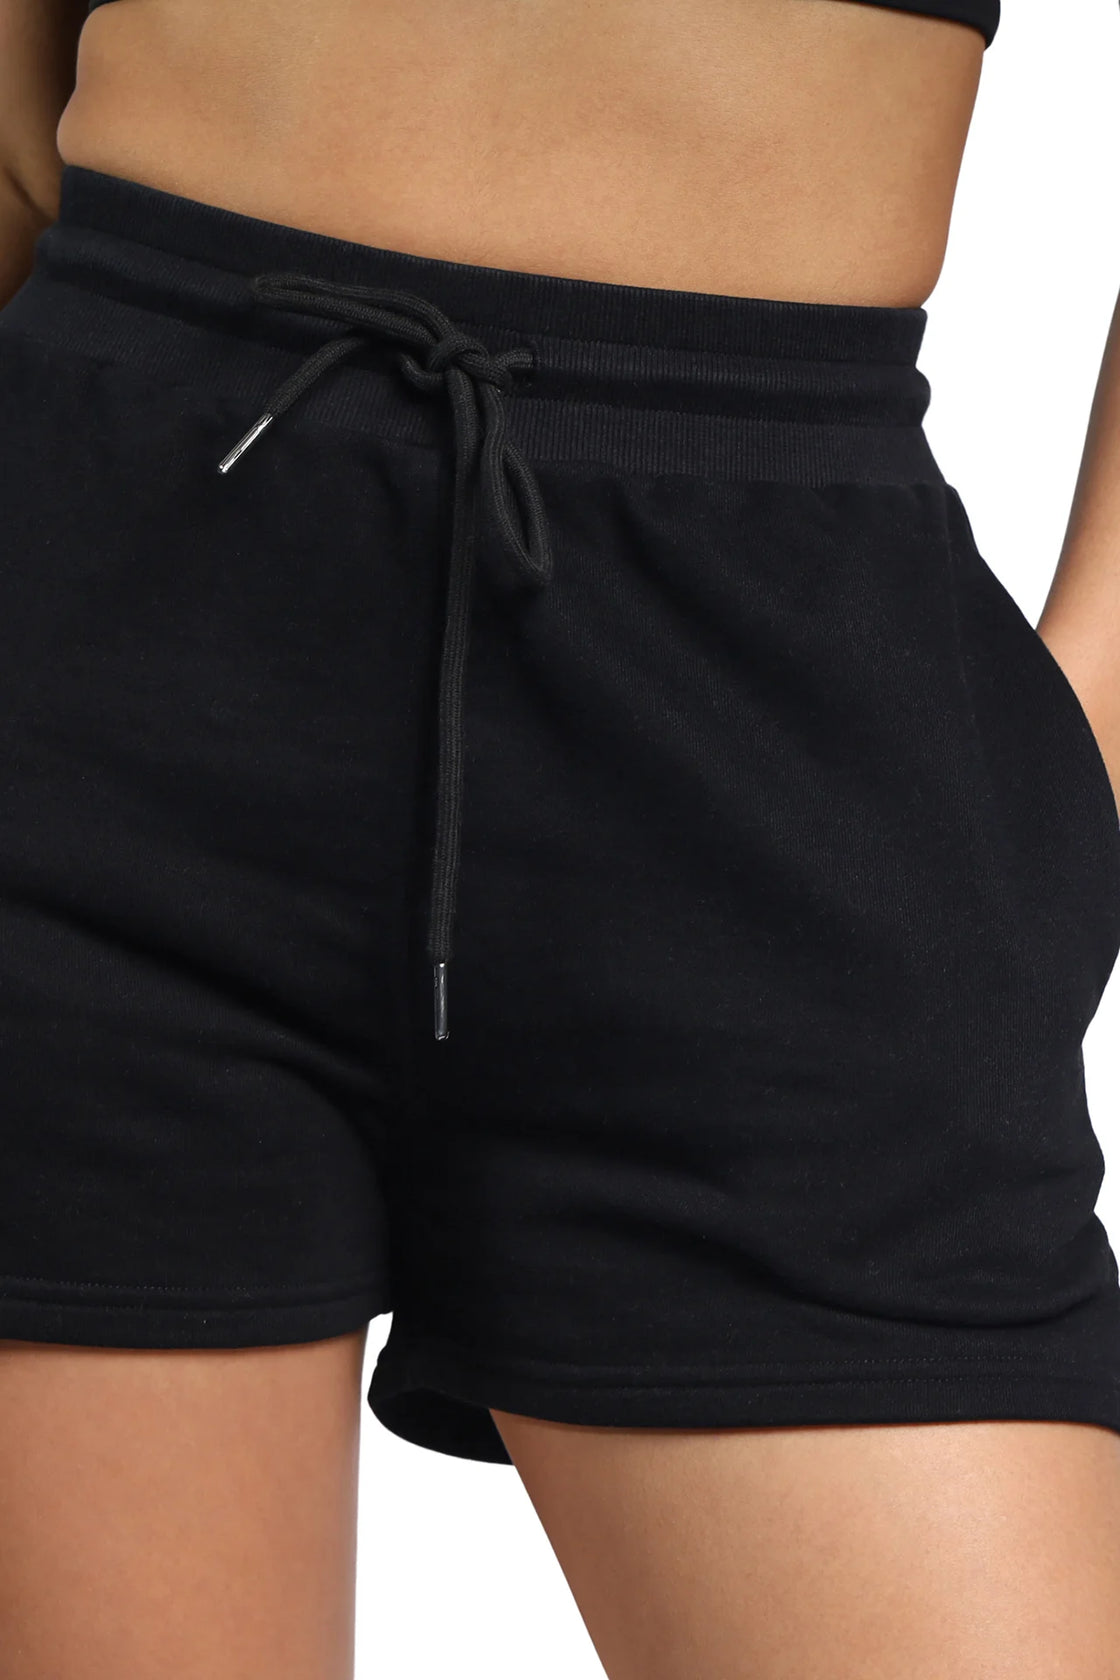 Black shorts with pocket